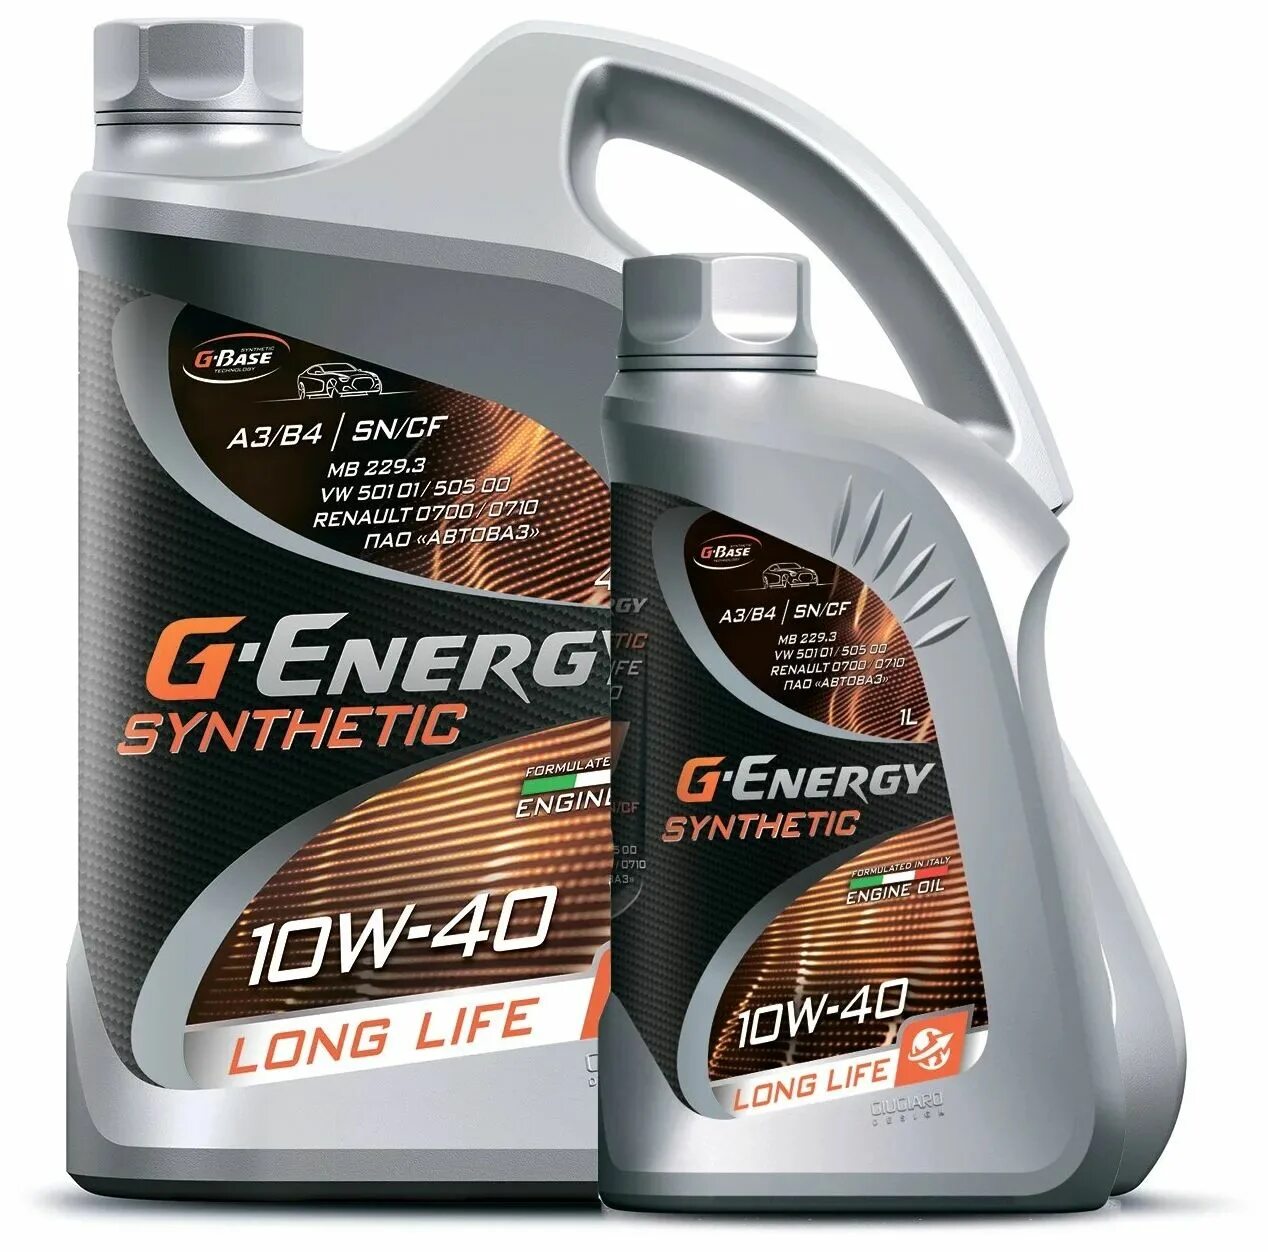 G-Energy Synthetic far East 5w-30 4л. G-Energy 5w30 Synthetic. G-Energy Synthetic Active 5w-30. G Energy 5w30 синтетика Active 1 л.